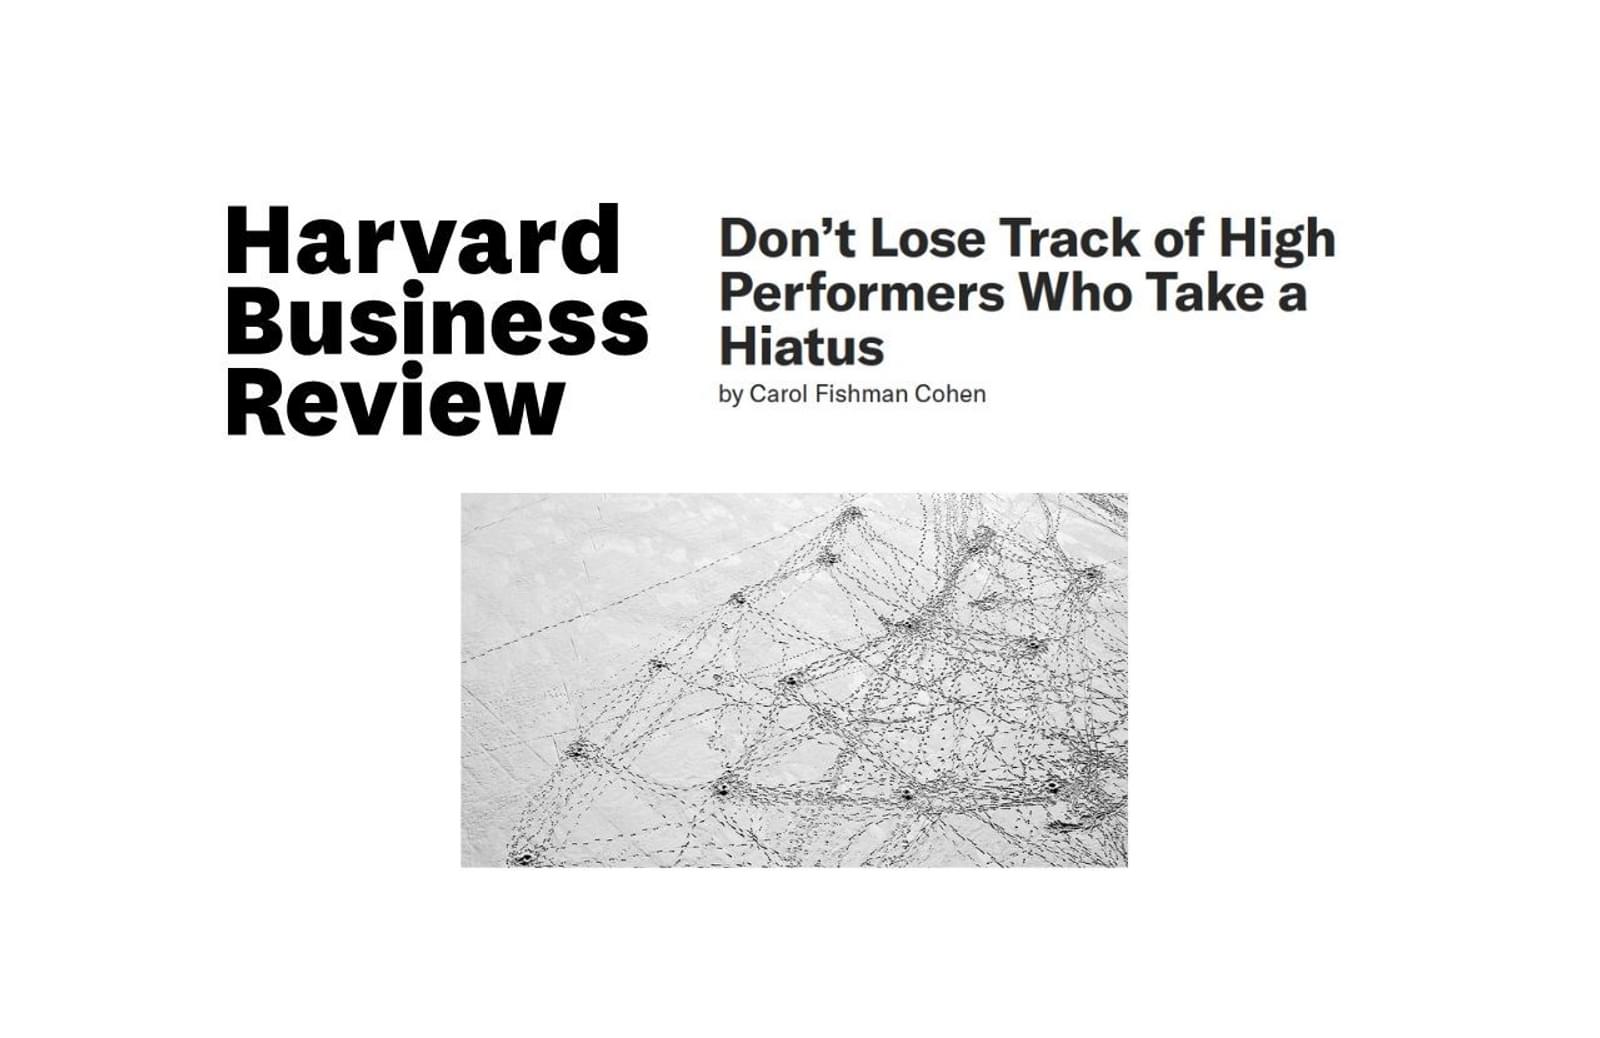 Hbr dont lose track high performers hiatus news thumbnail